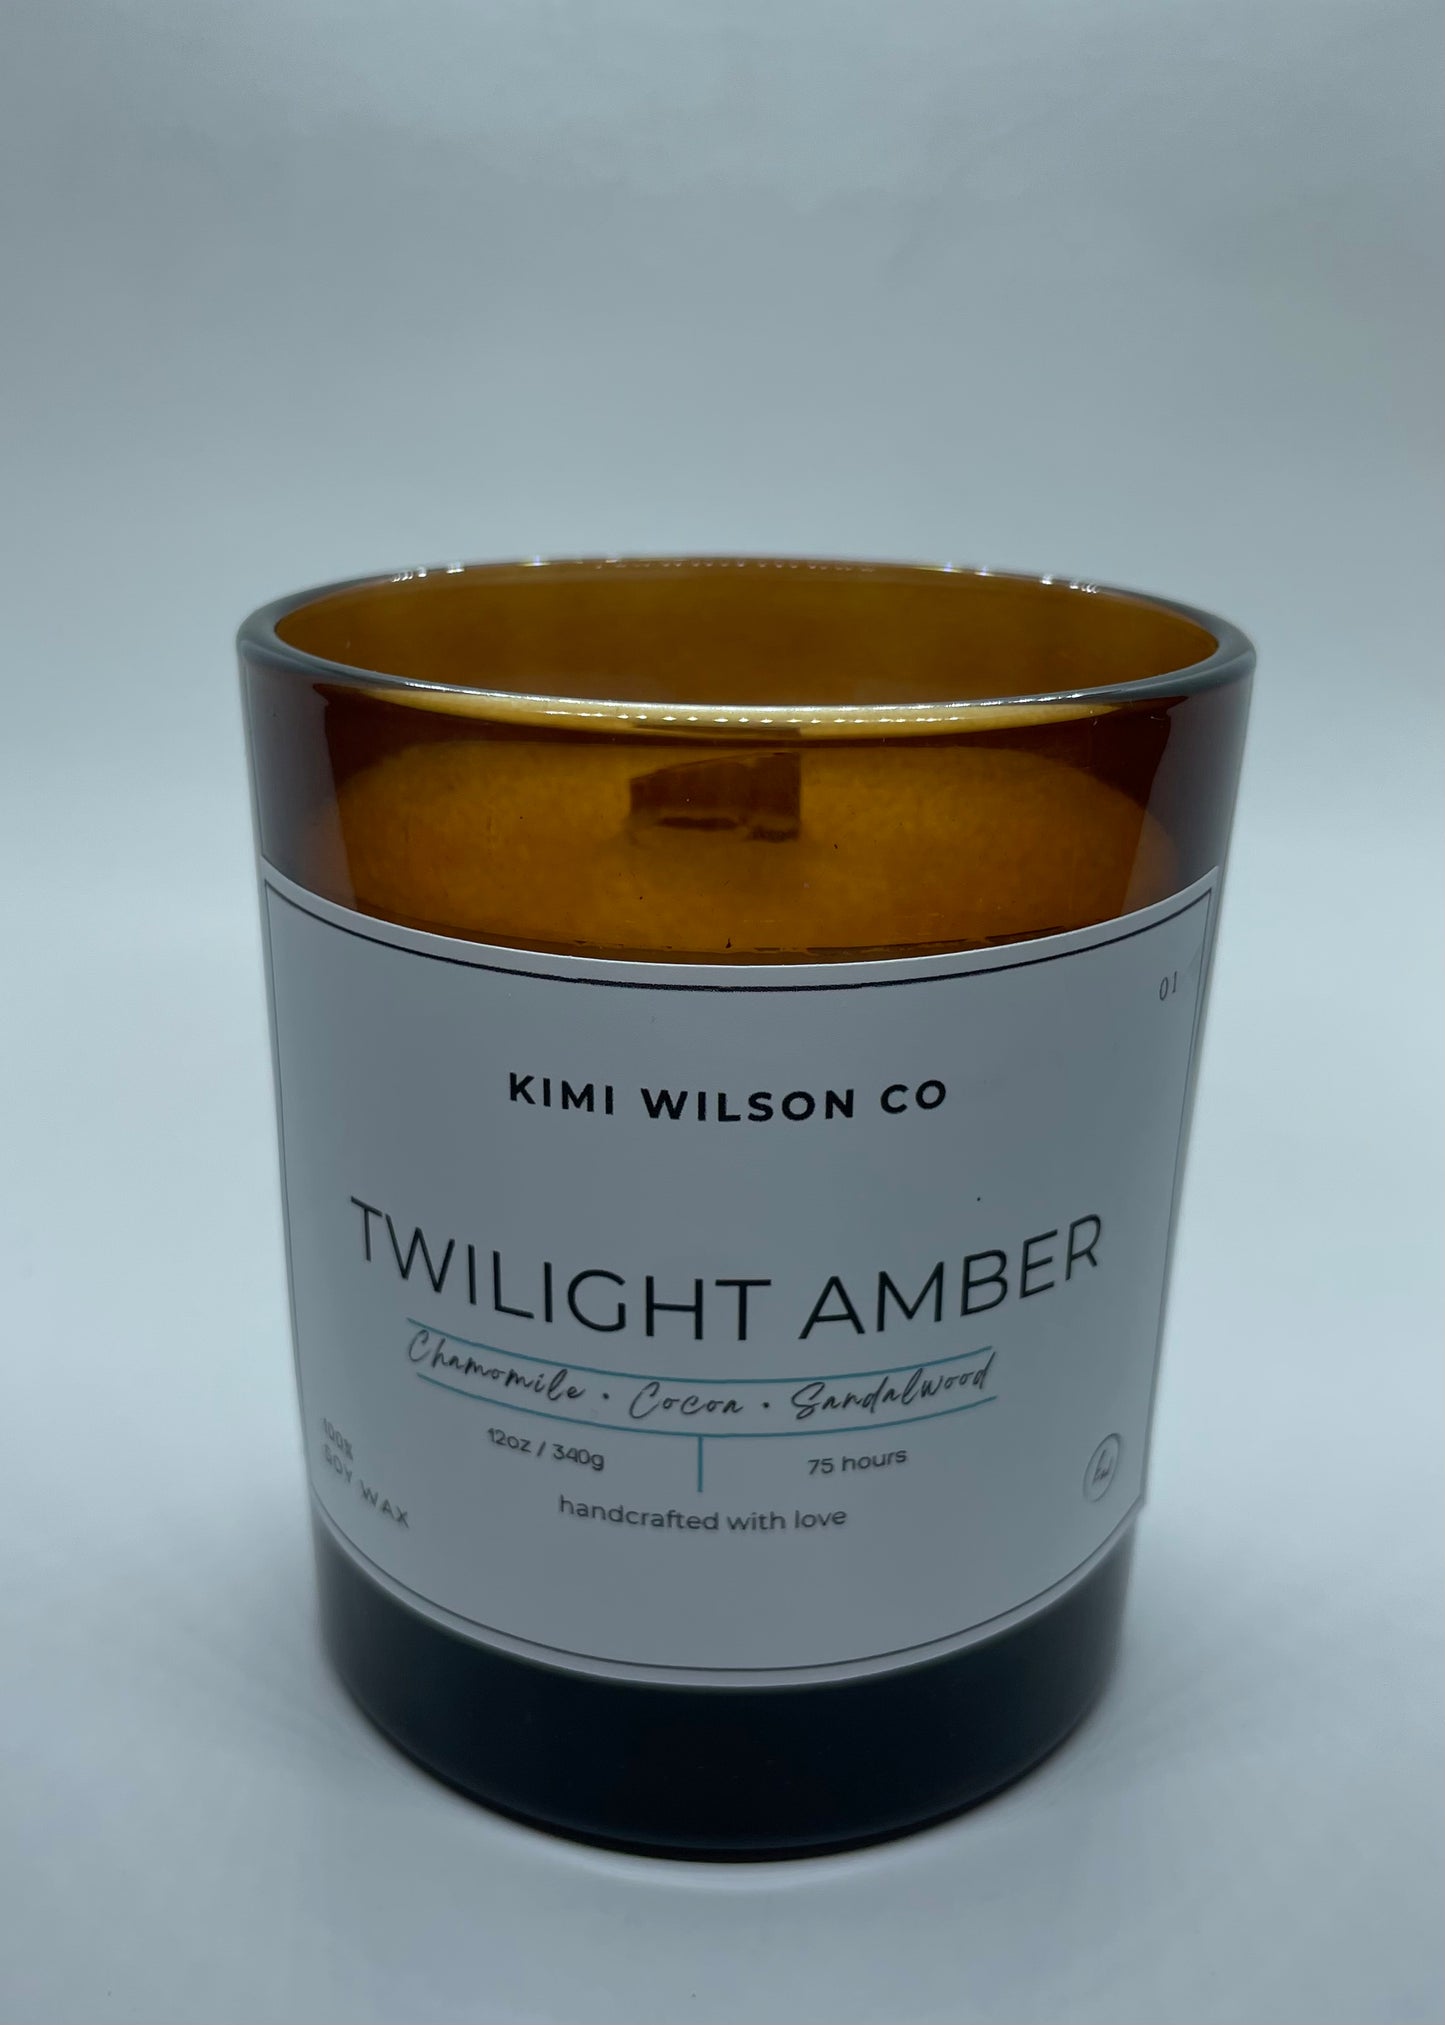 Twilight Amber